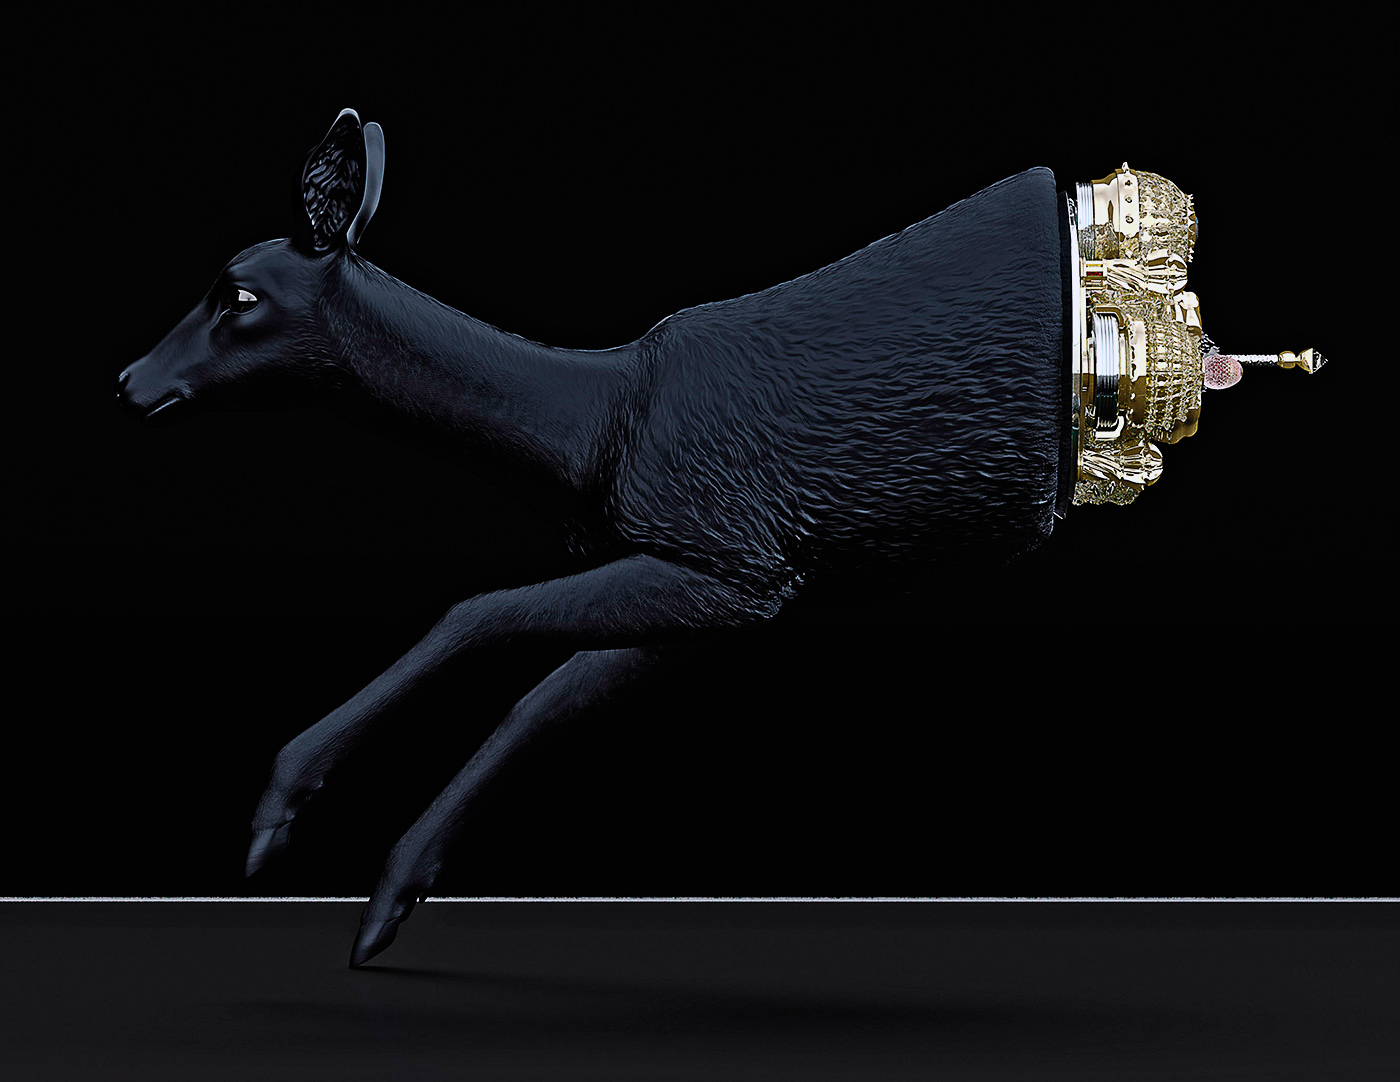 ivan venkov sculpture animal deer composition object digital Zbrush conceptual art gold golden cabinet glass egg Faberge